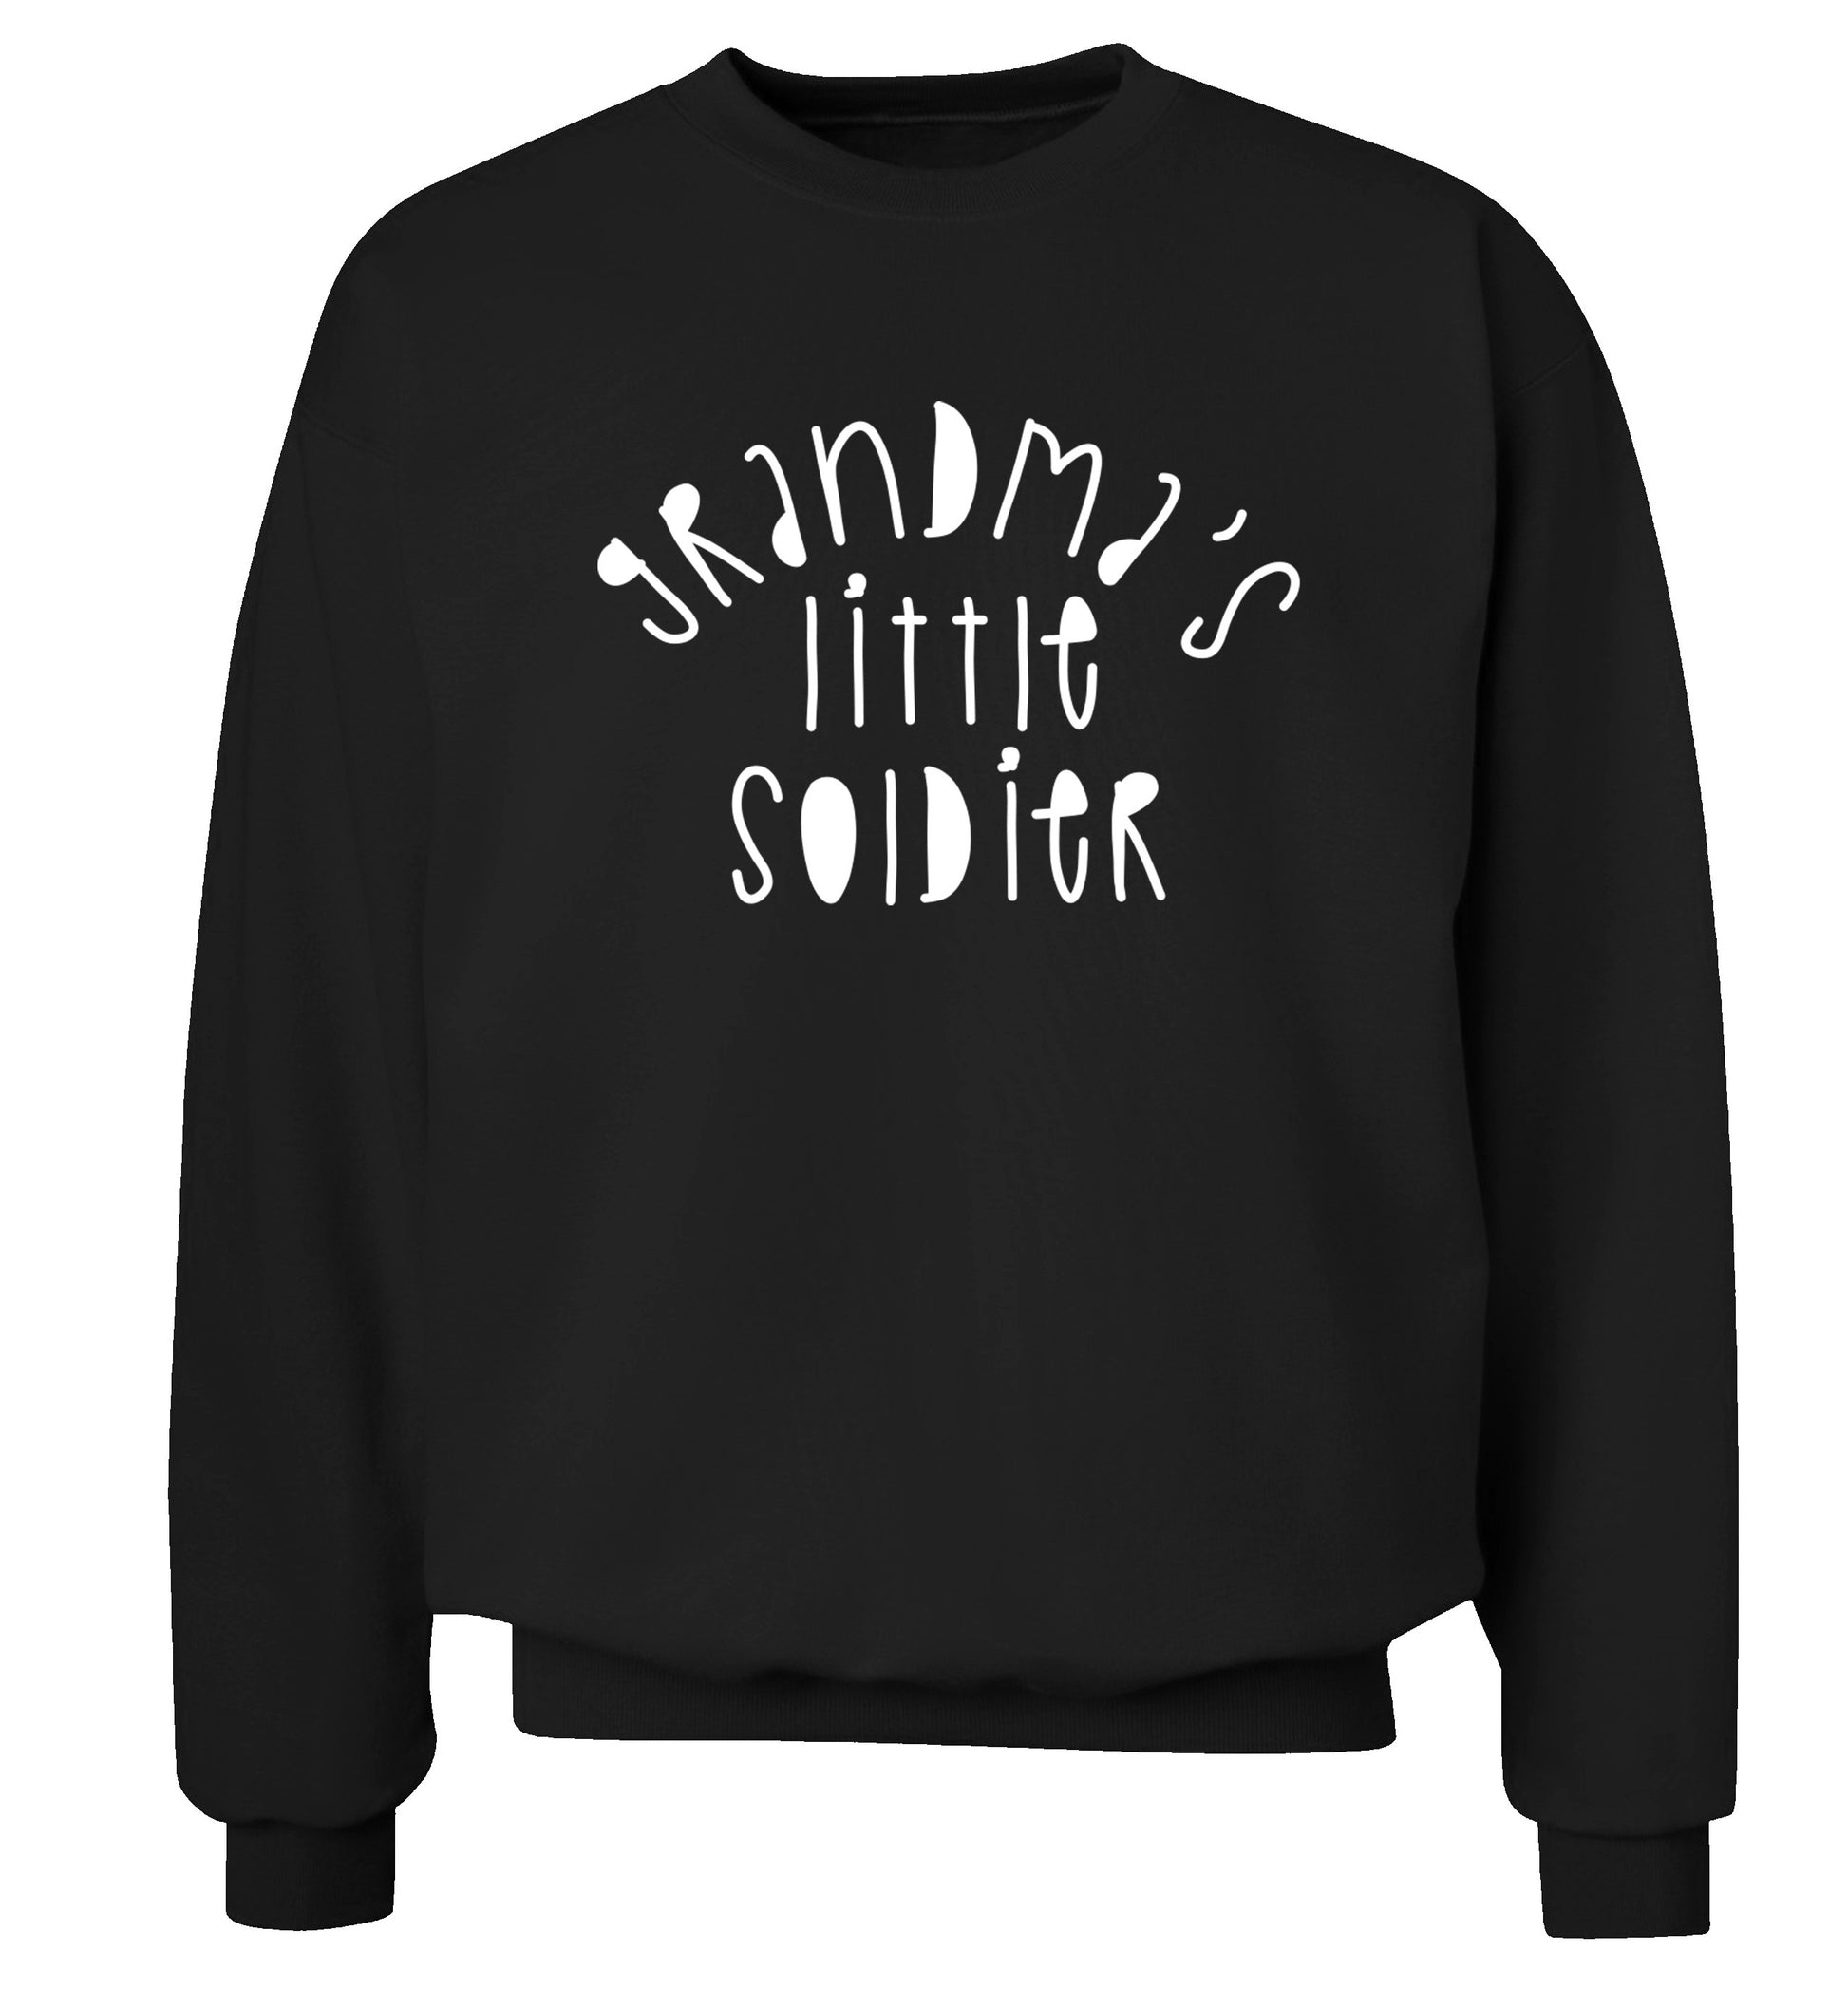 Grandma's little soldier Adult's unisex black Sweater 2XL